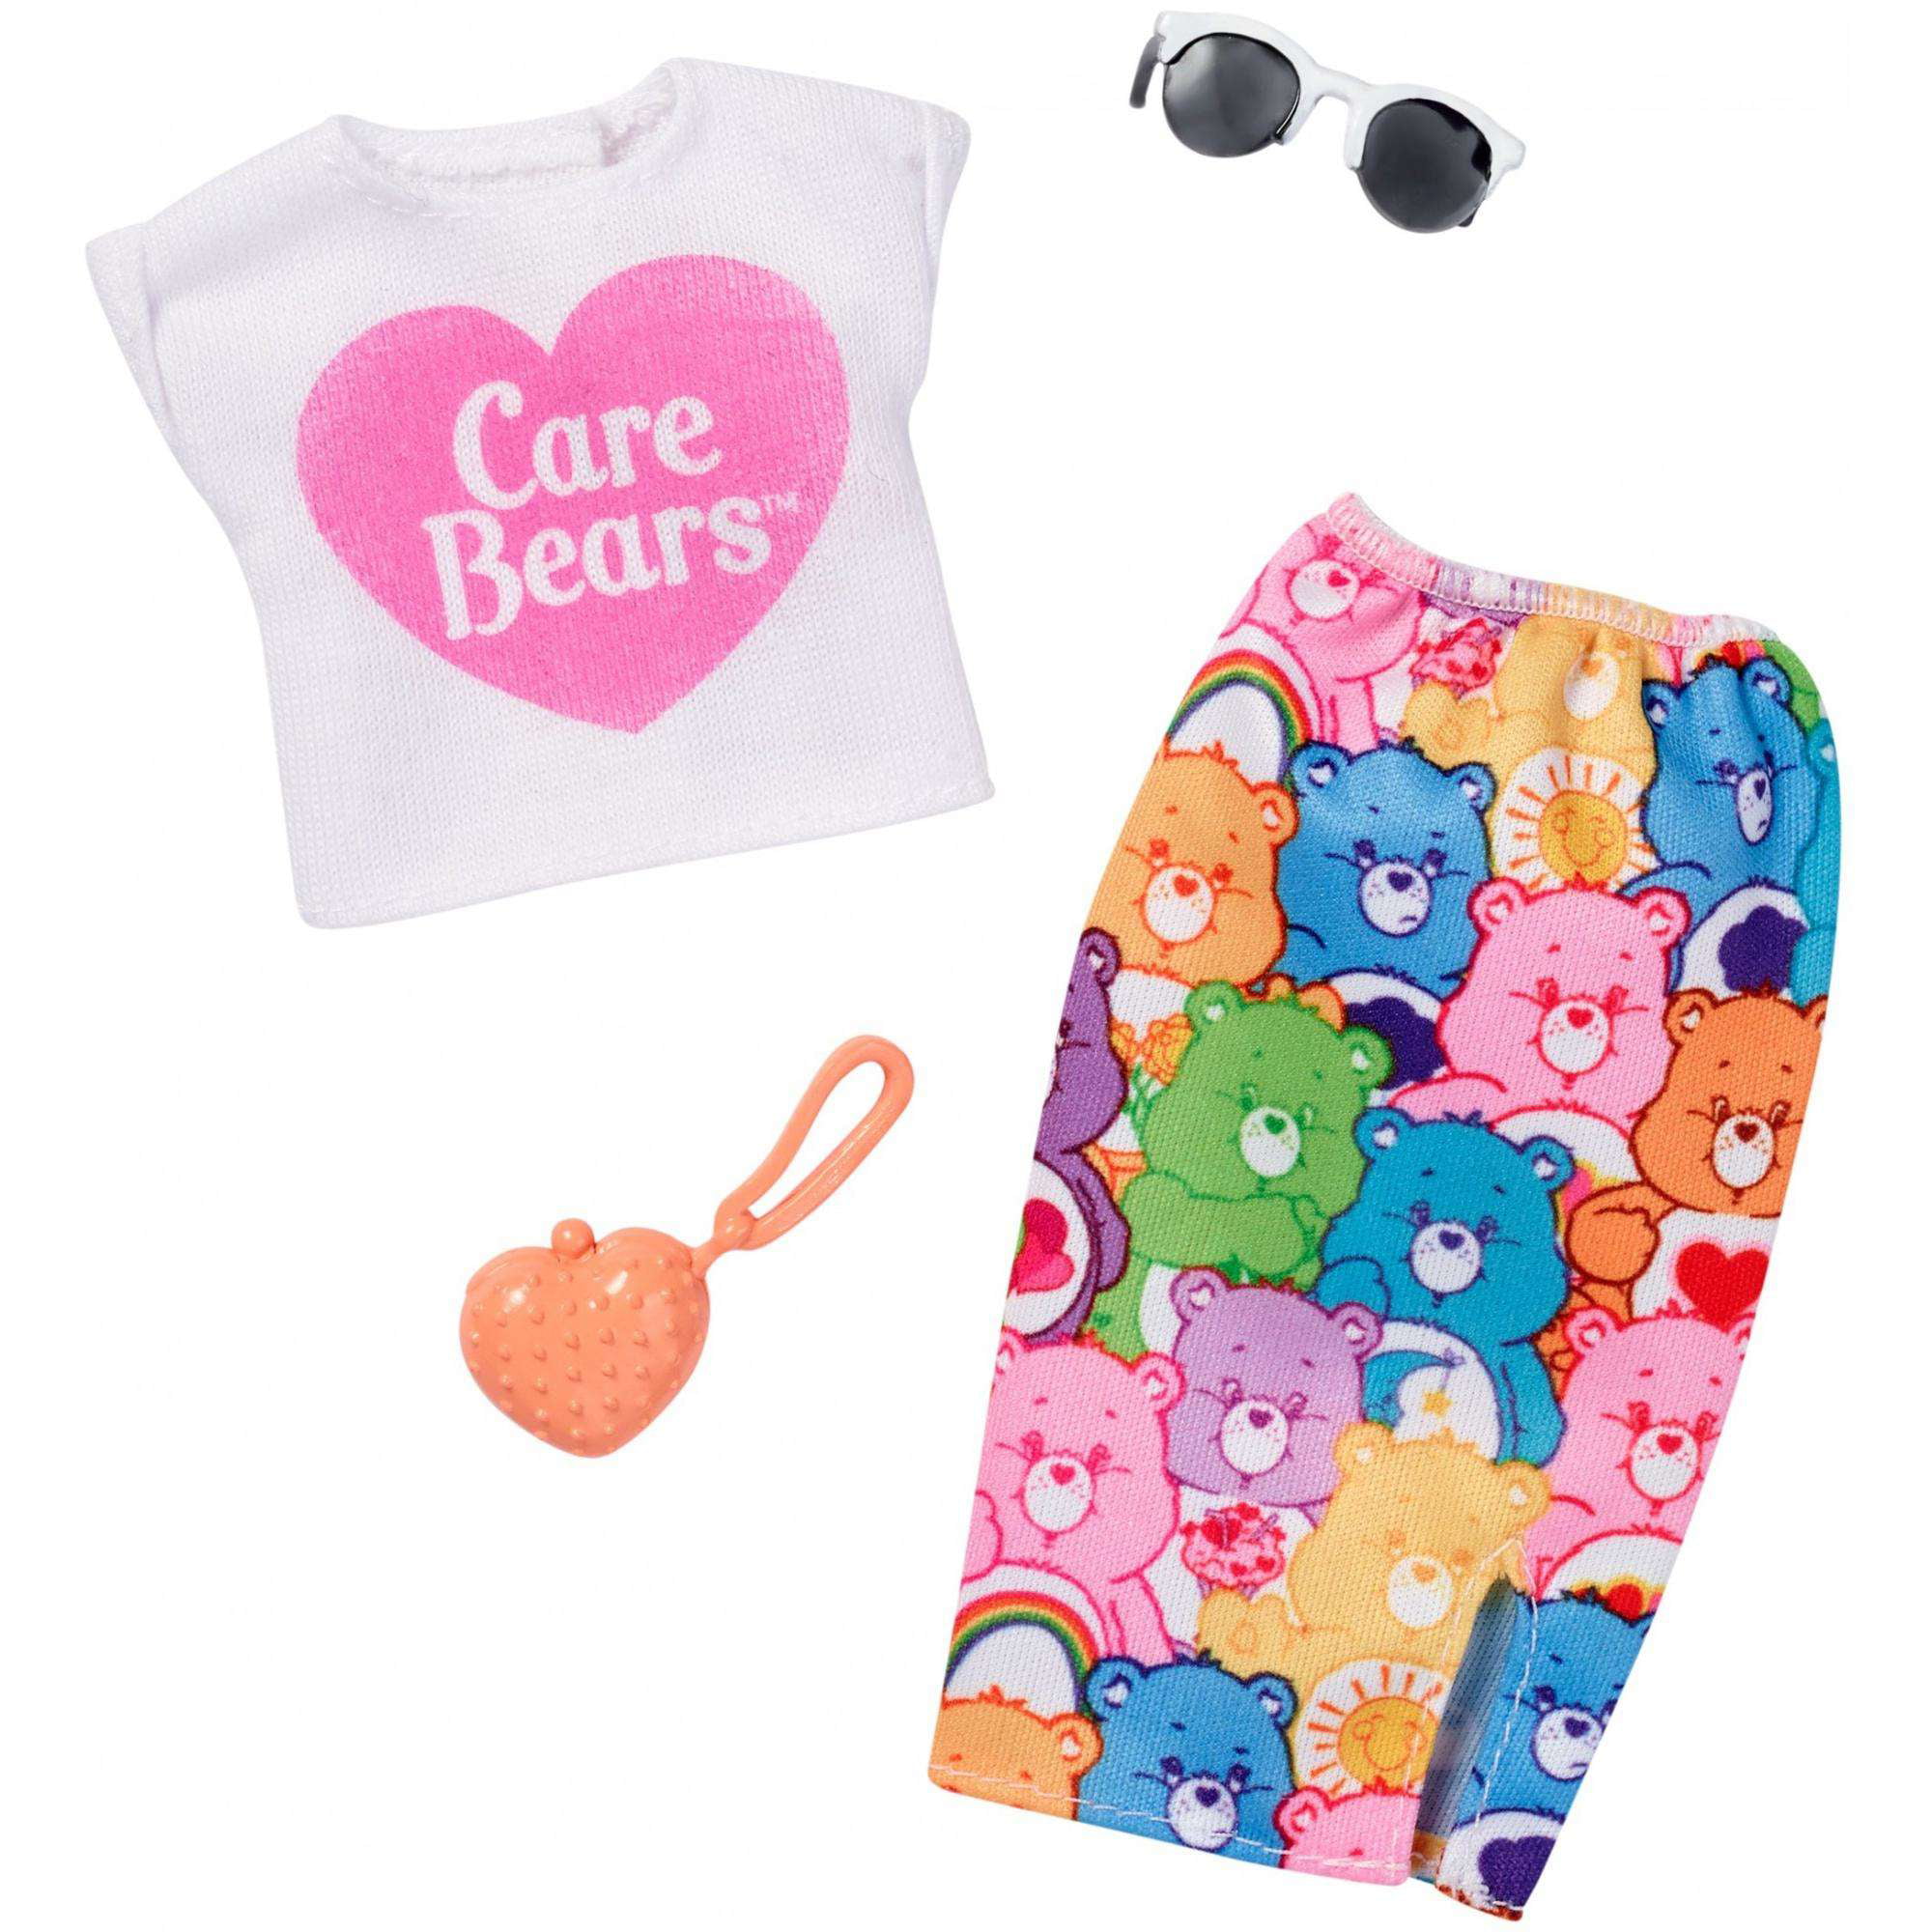 Barbie Care Bears Fashion Tops lot of 4 